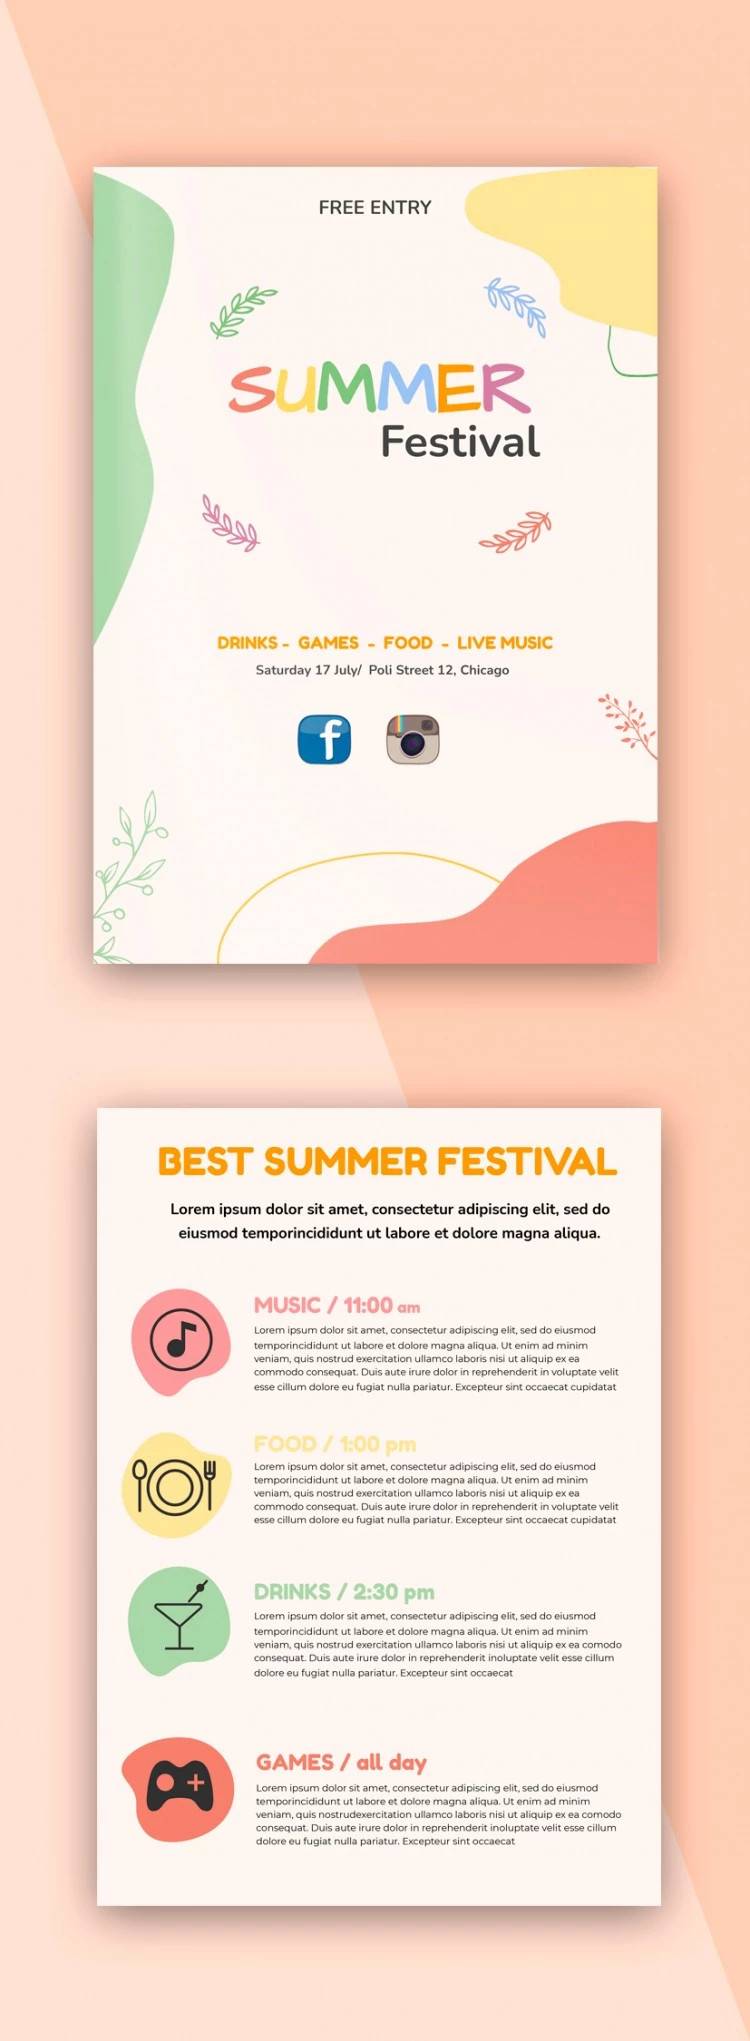 Sommerfest Flyer - free Google Docs Template - 10061682